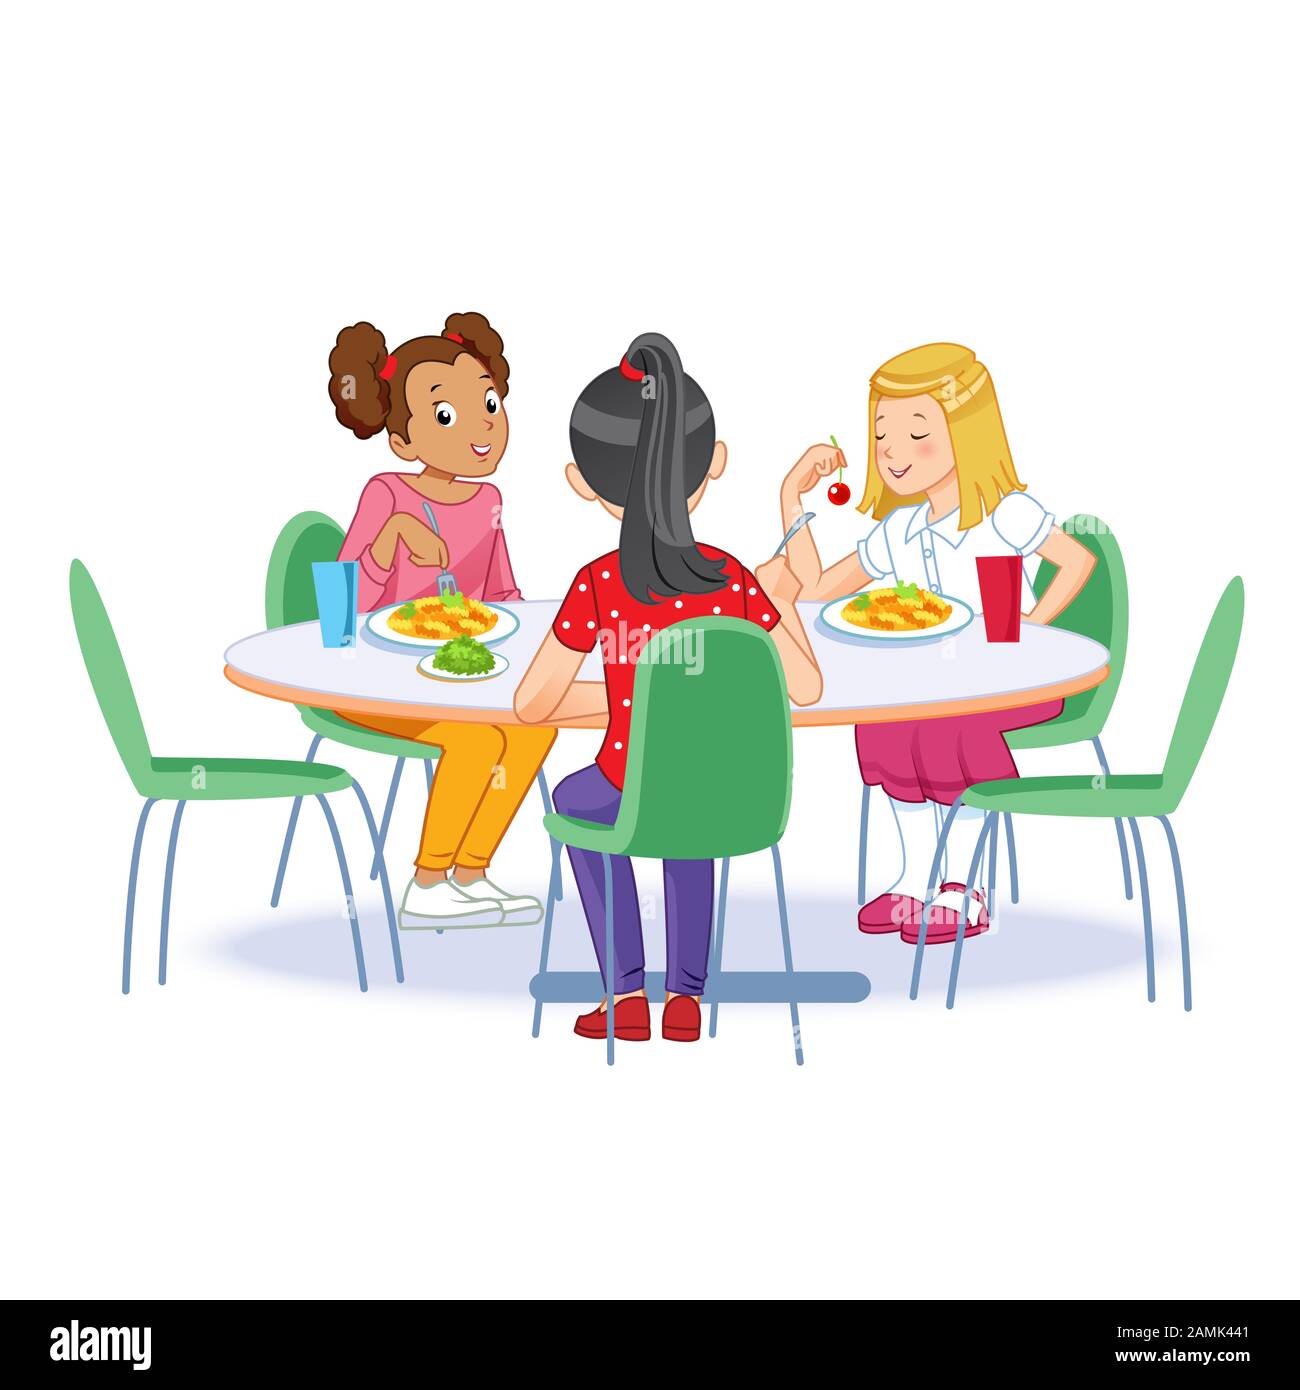 The children who eats breakfast. Happy kids having breakfast by themselves. Vector illustration for banner, poster, website, flyer Stock Vector